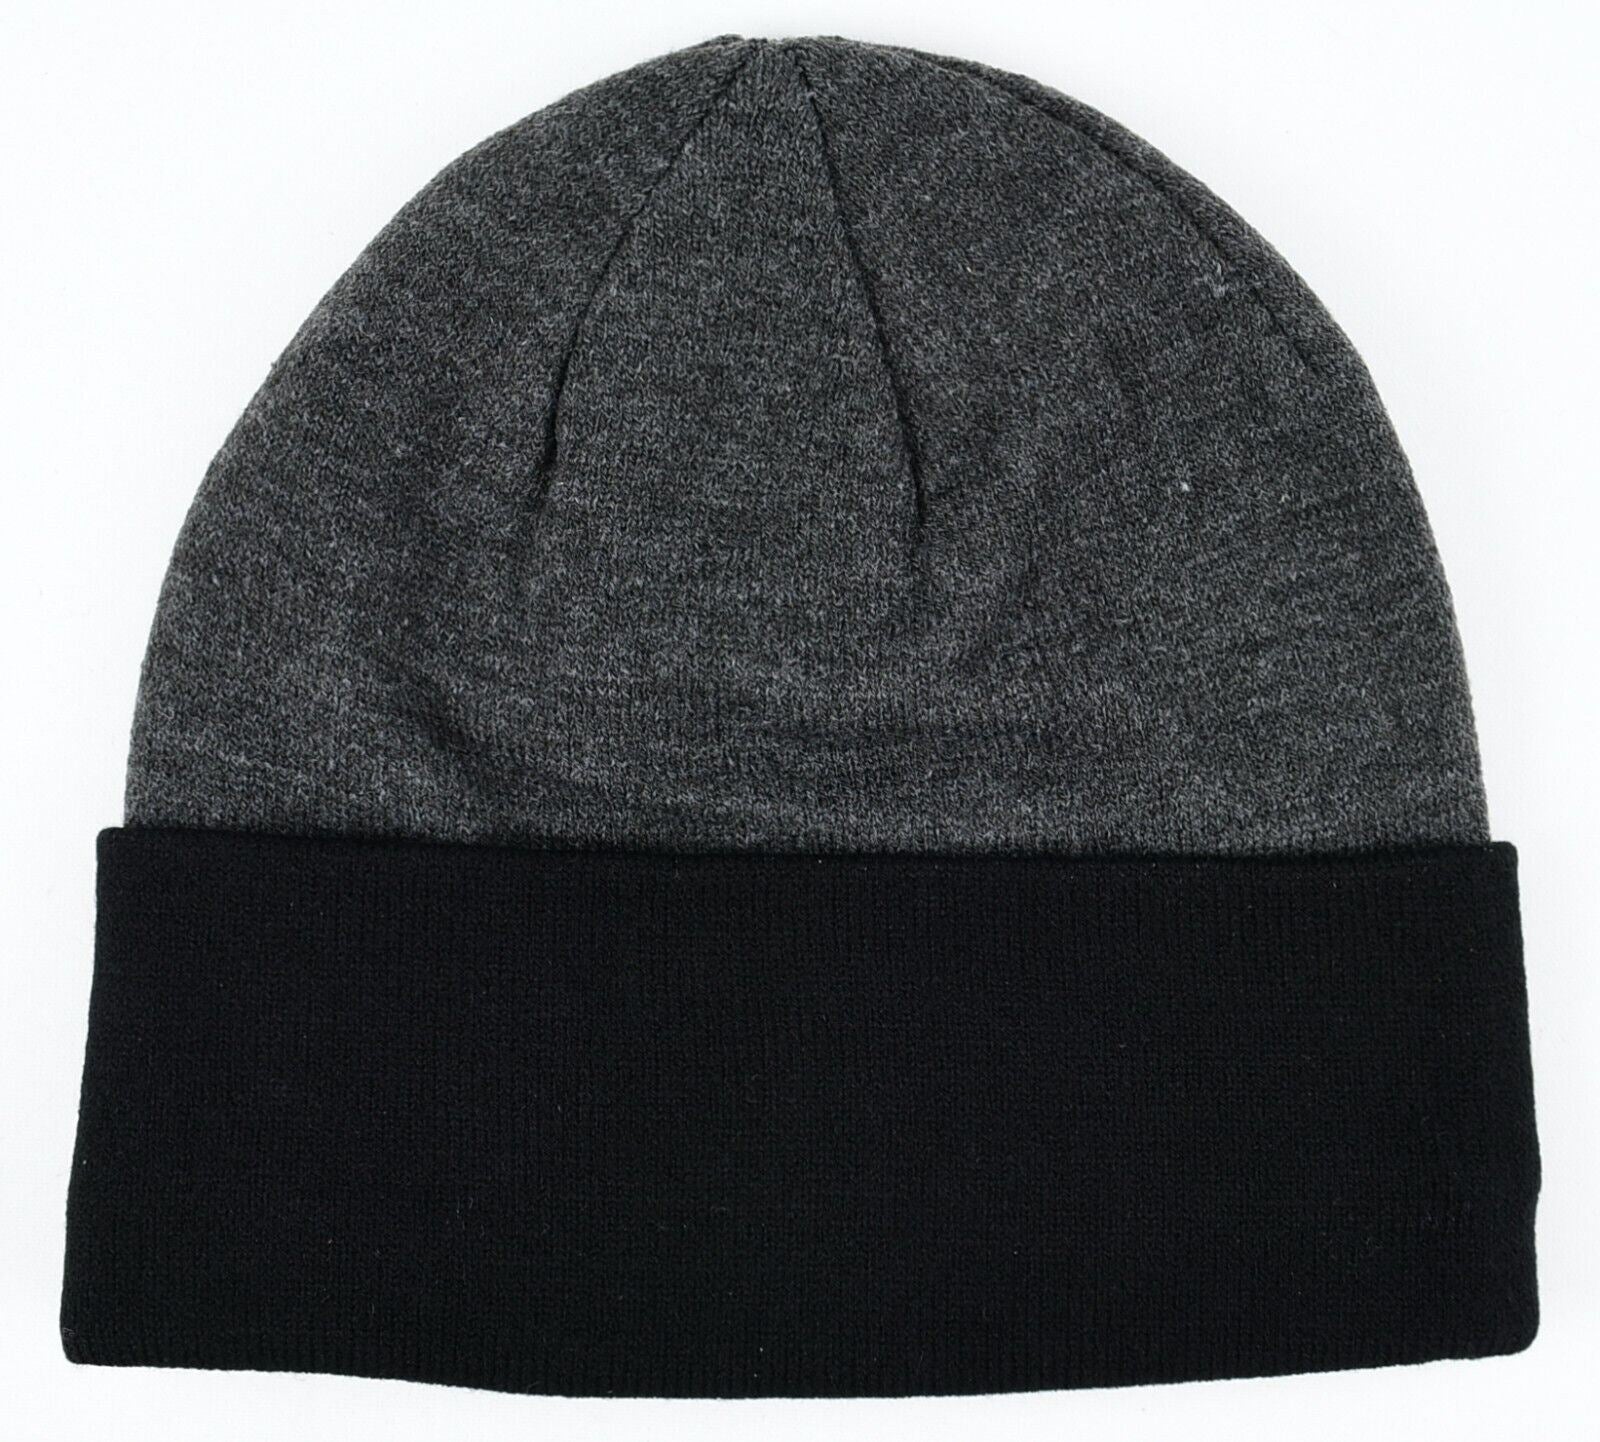 DKNY SPORT Mens Womens Knitted Beanie Hat, Fleece Lined, Grey/Black